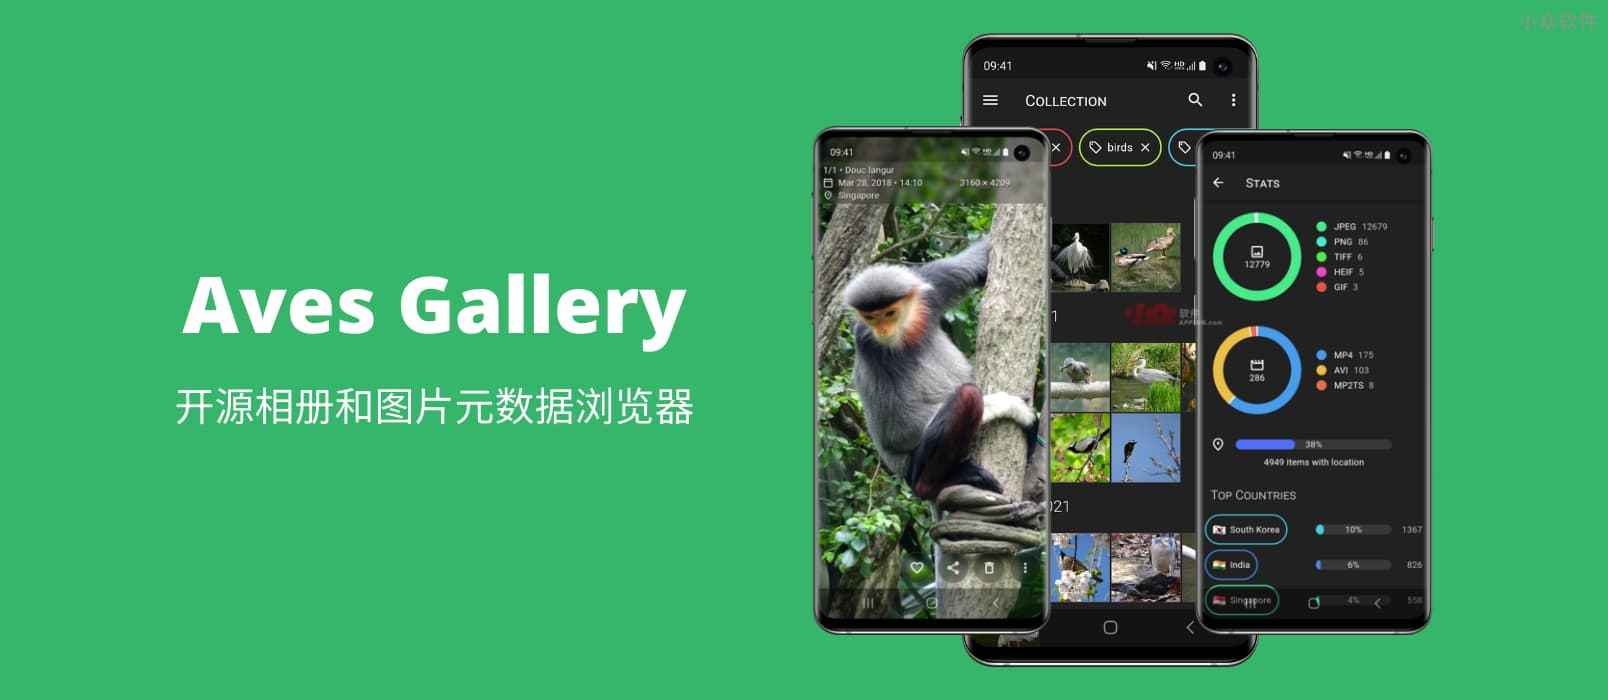 Aves Gallery - 开源相册和图片 EXIF 原数据浏览器[Android]